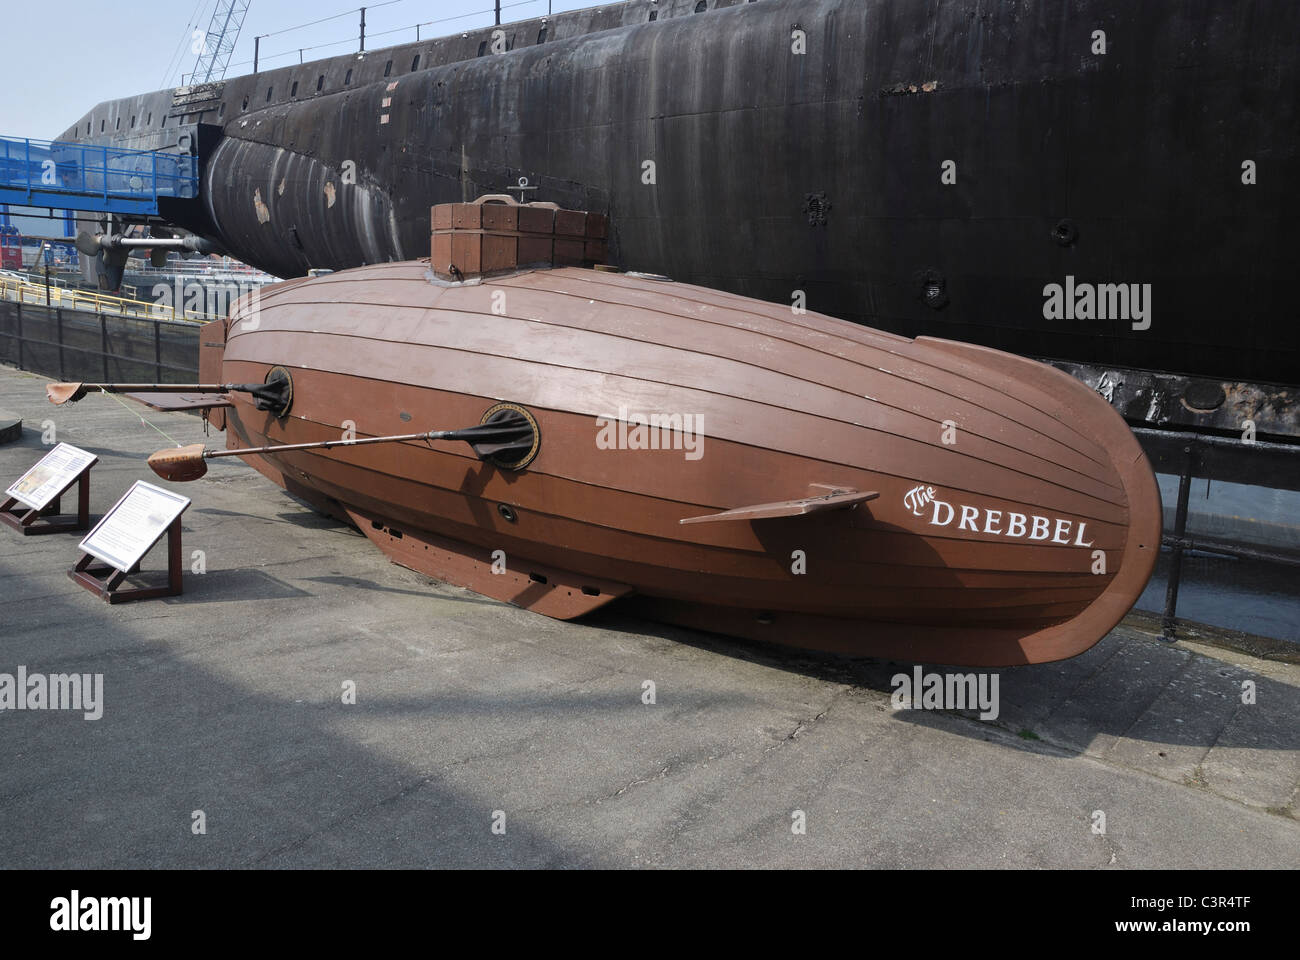 A replica of the Van Drebbel submarine at the Royal Navy Submarine Museum, Gosport, Hants, England. Stock Photo